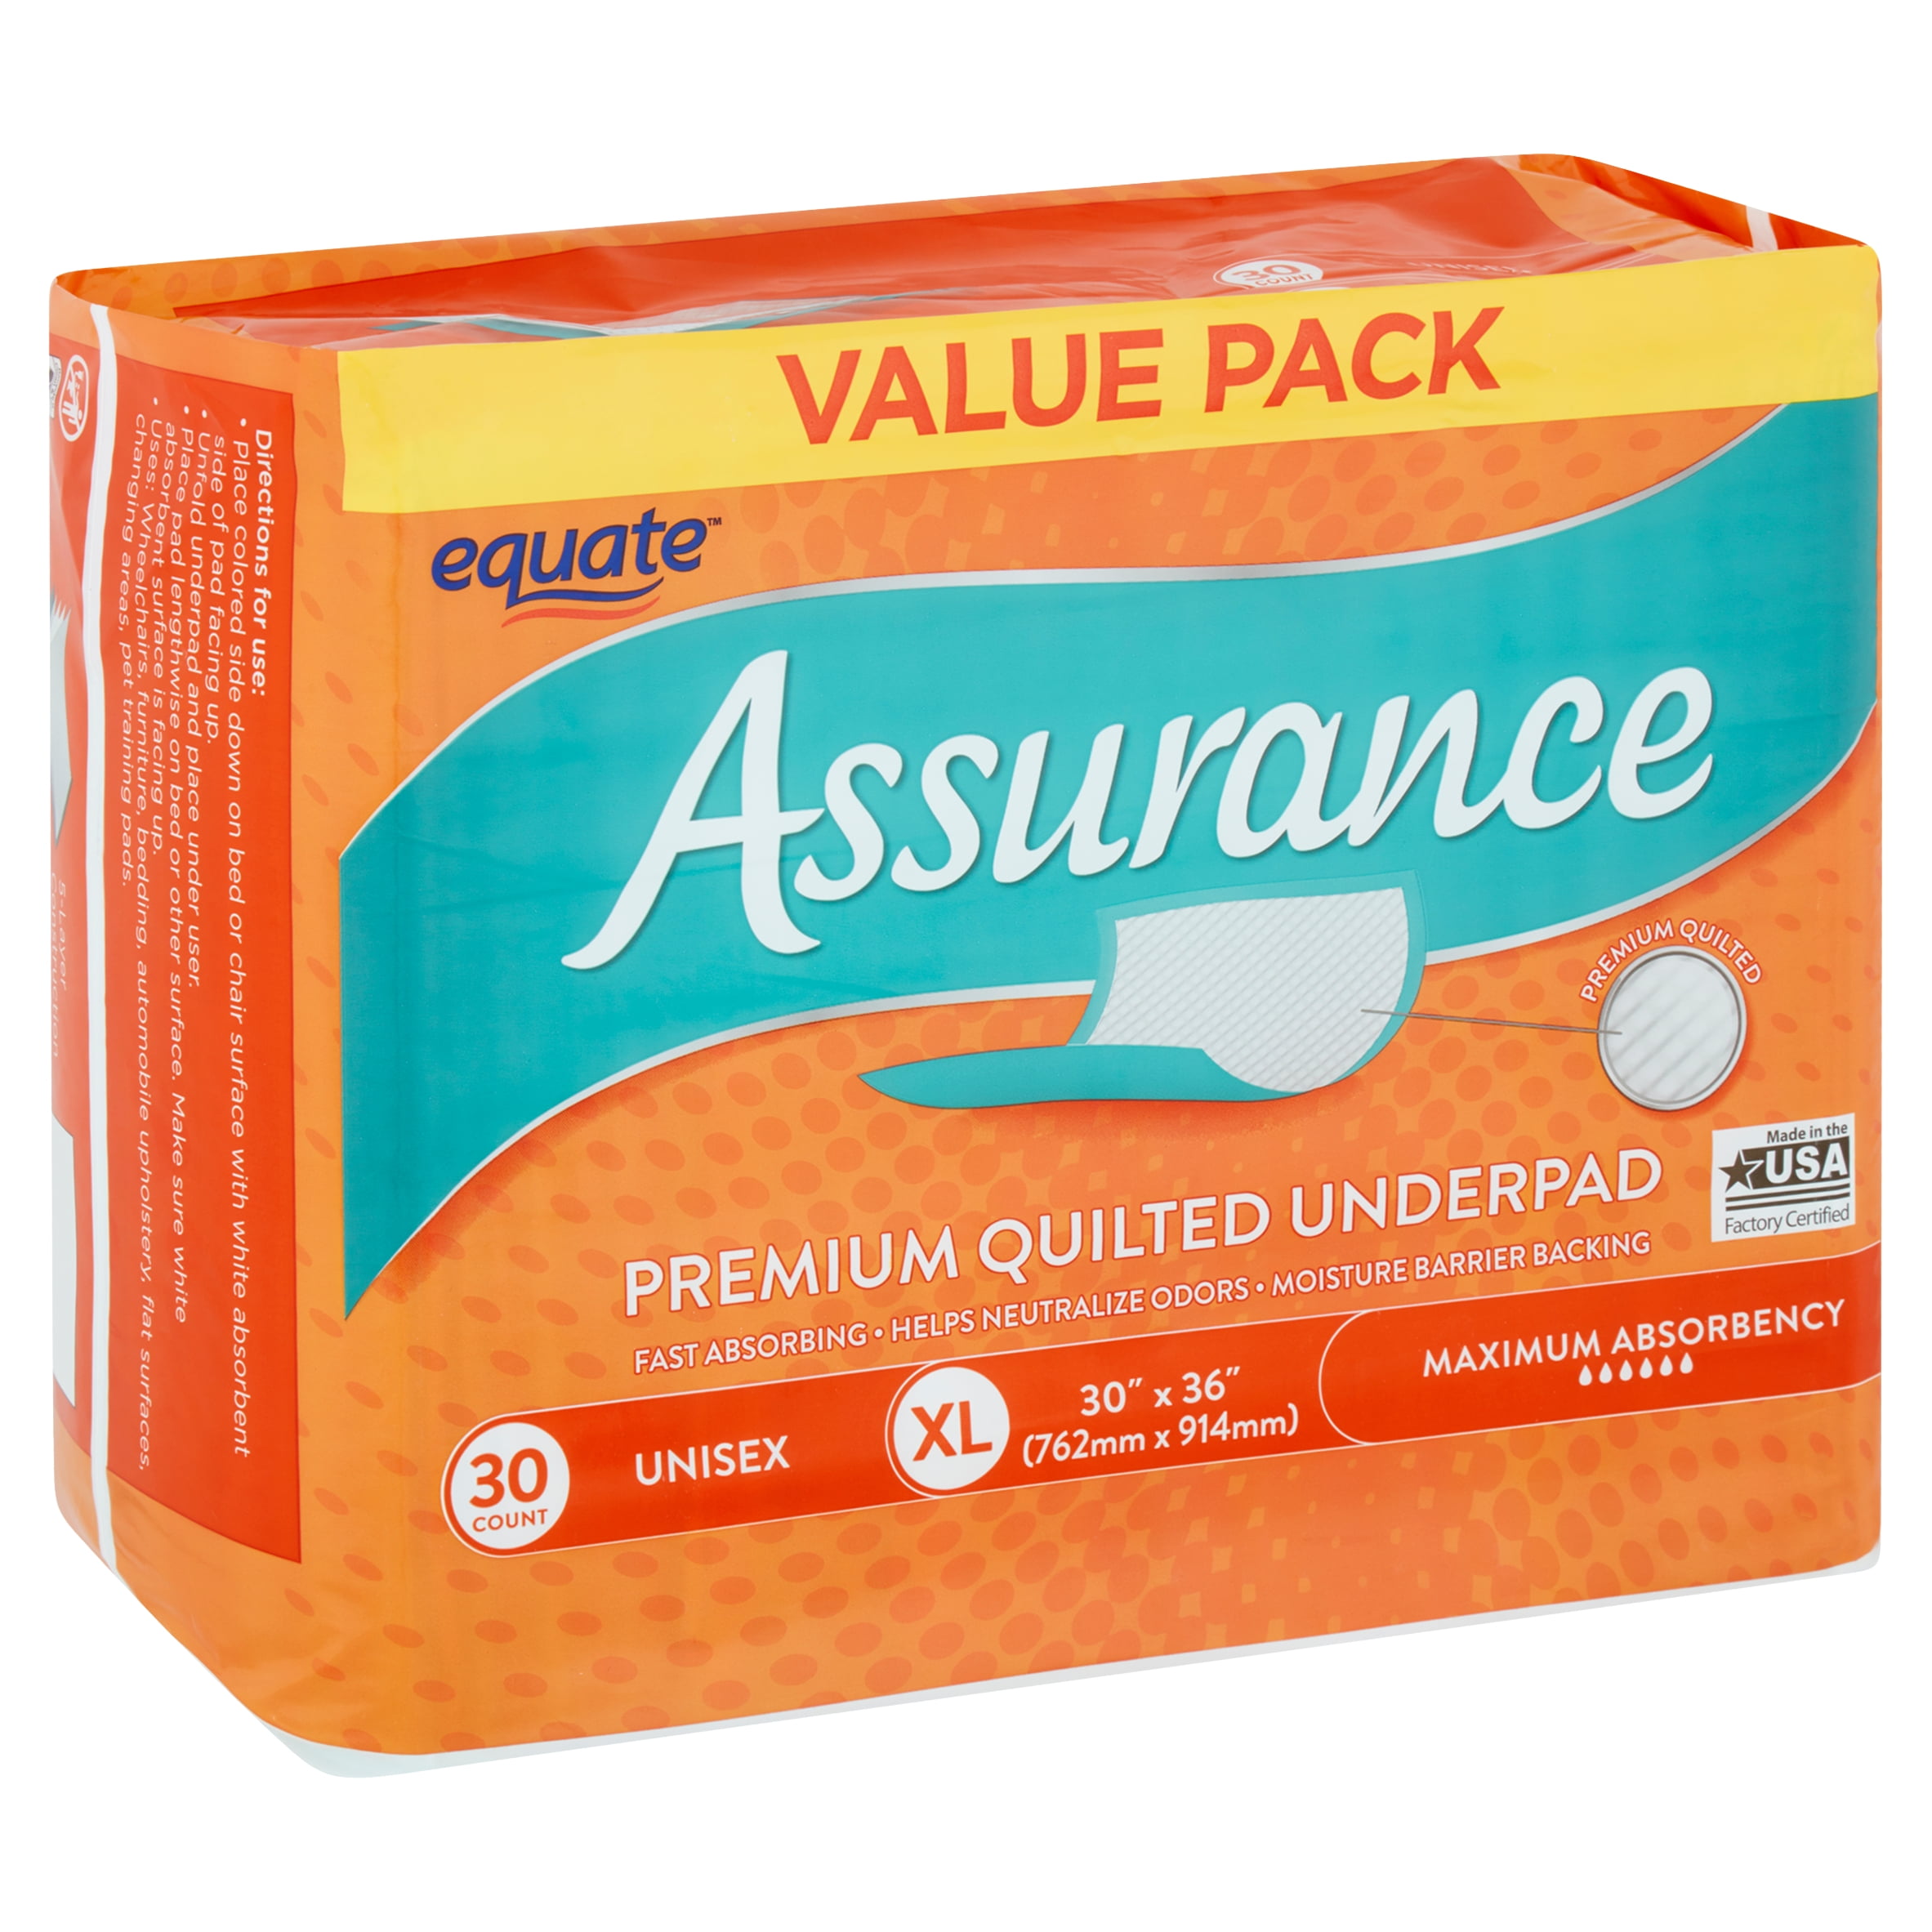 Equate Assurance Maximum Absorbency Unisex Premium Quilted Underpad Value Pack Xl 30 Count Walmart Com Walmart Com